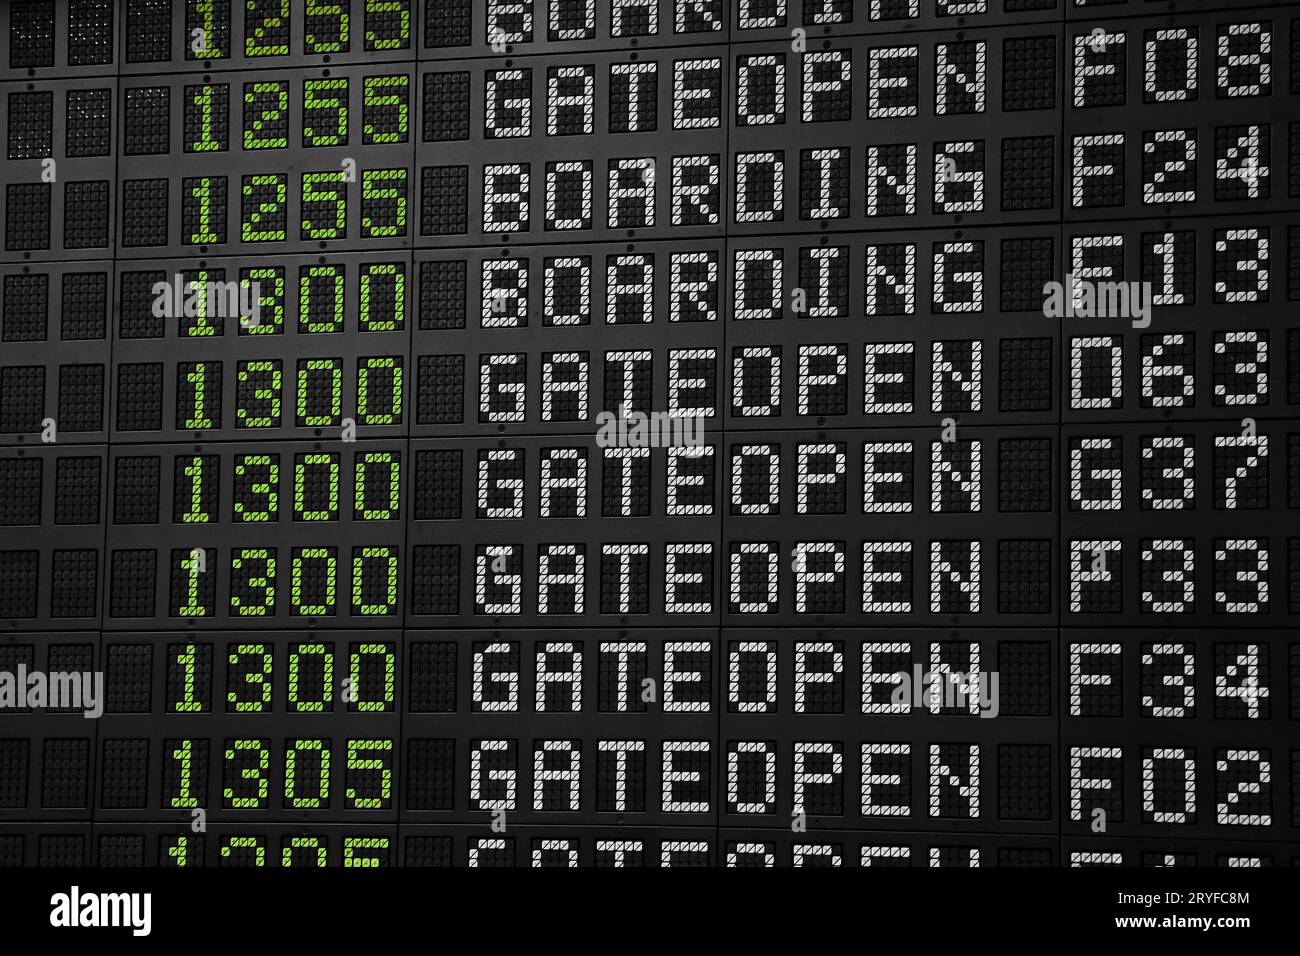 Flight information panel at airport Stock Photo